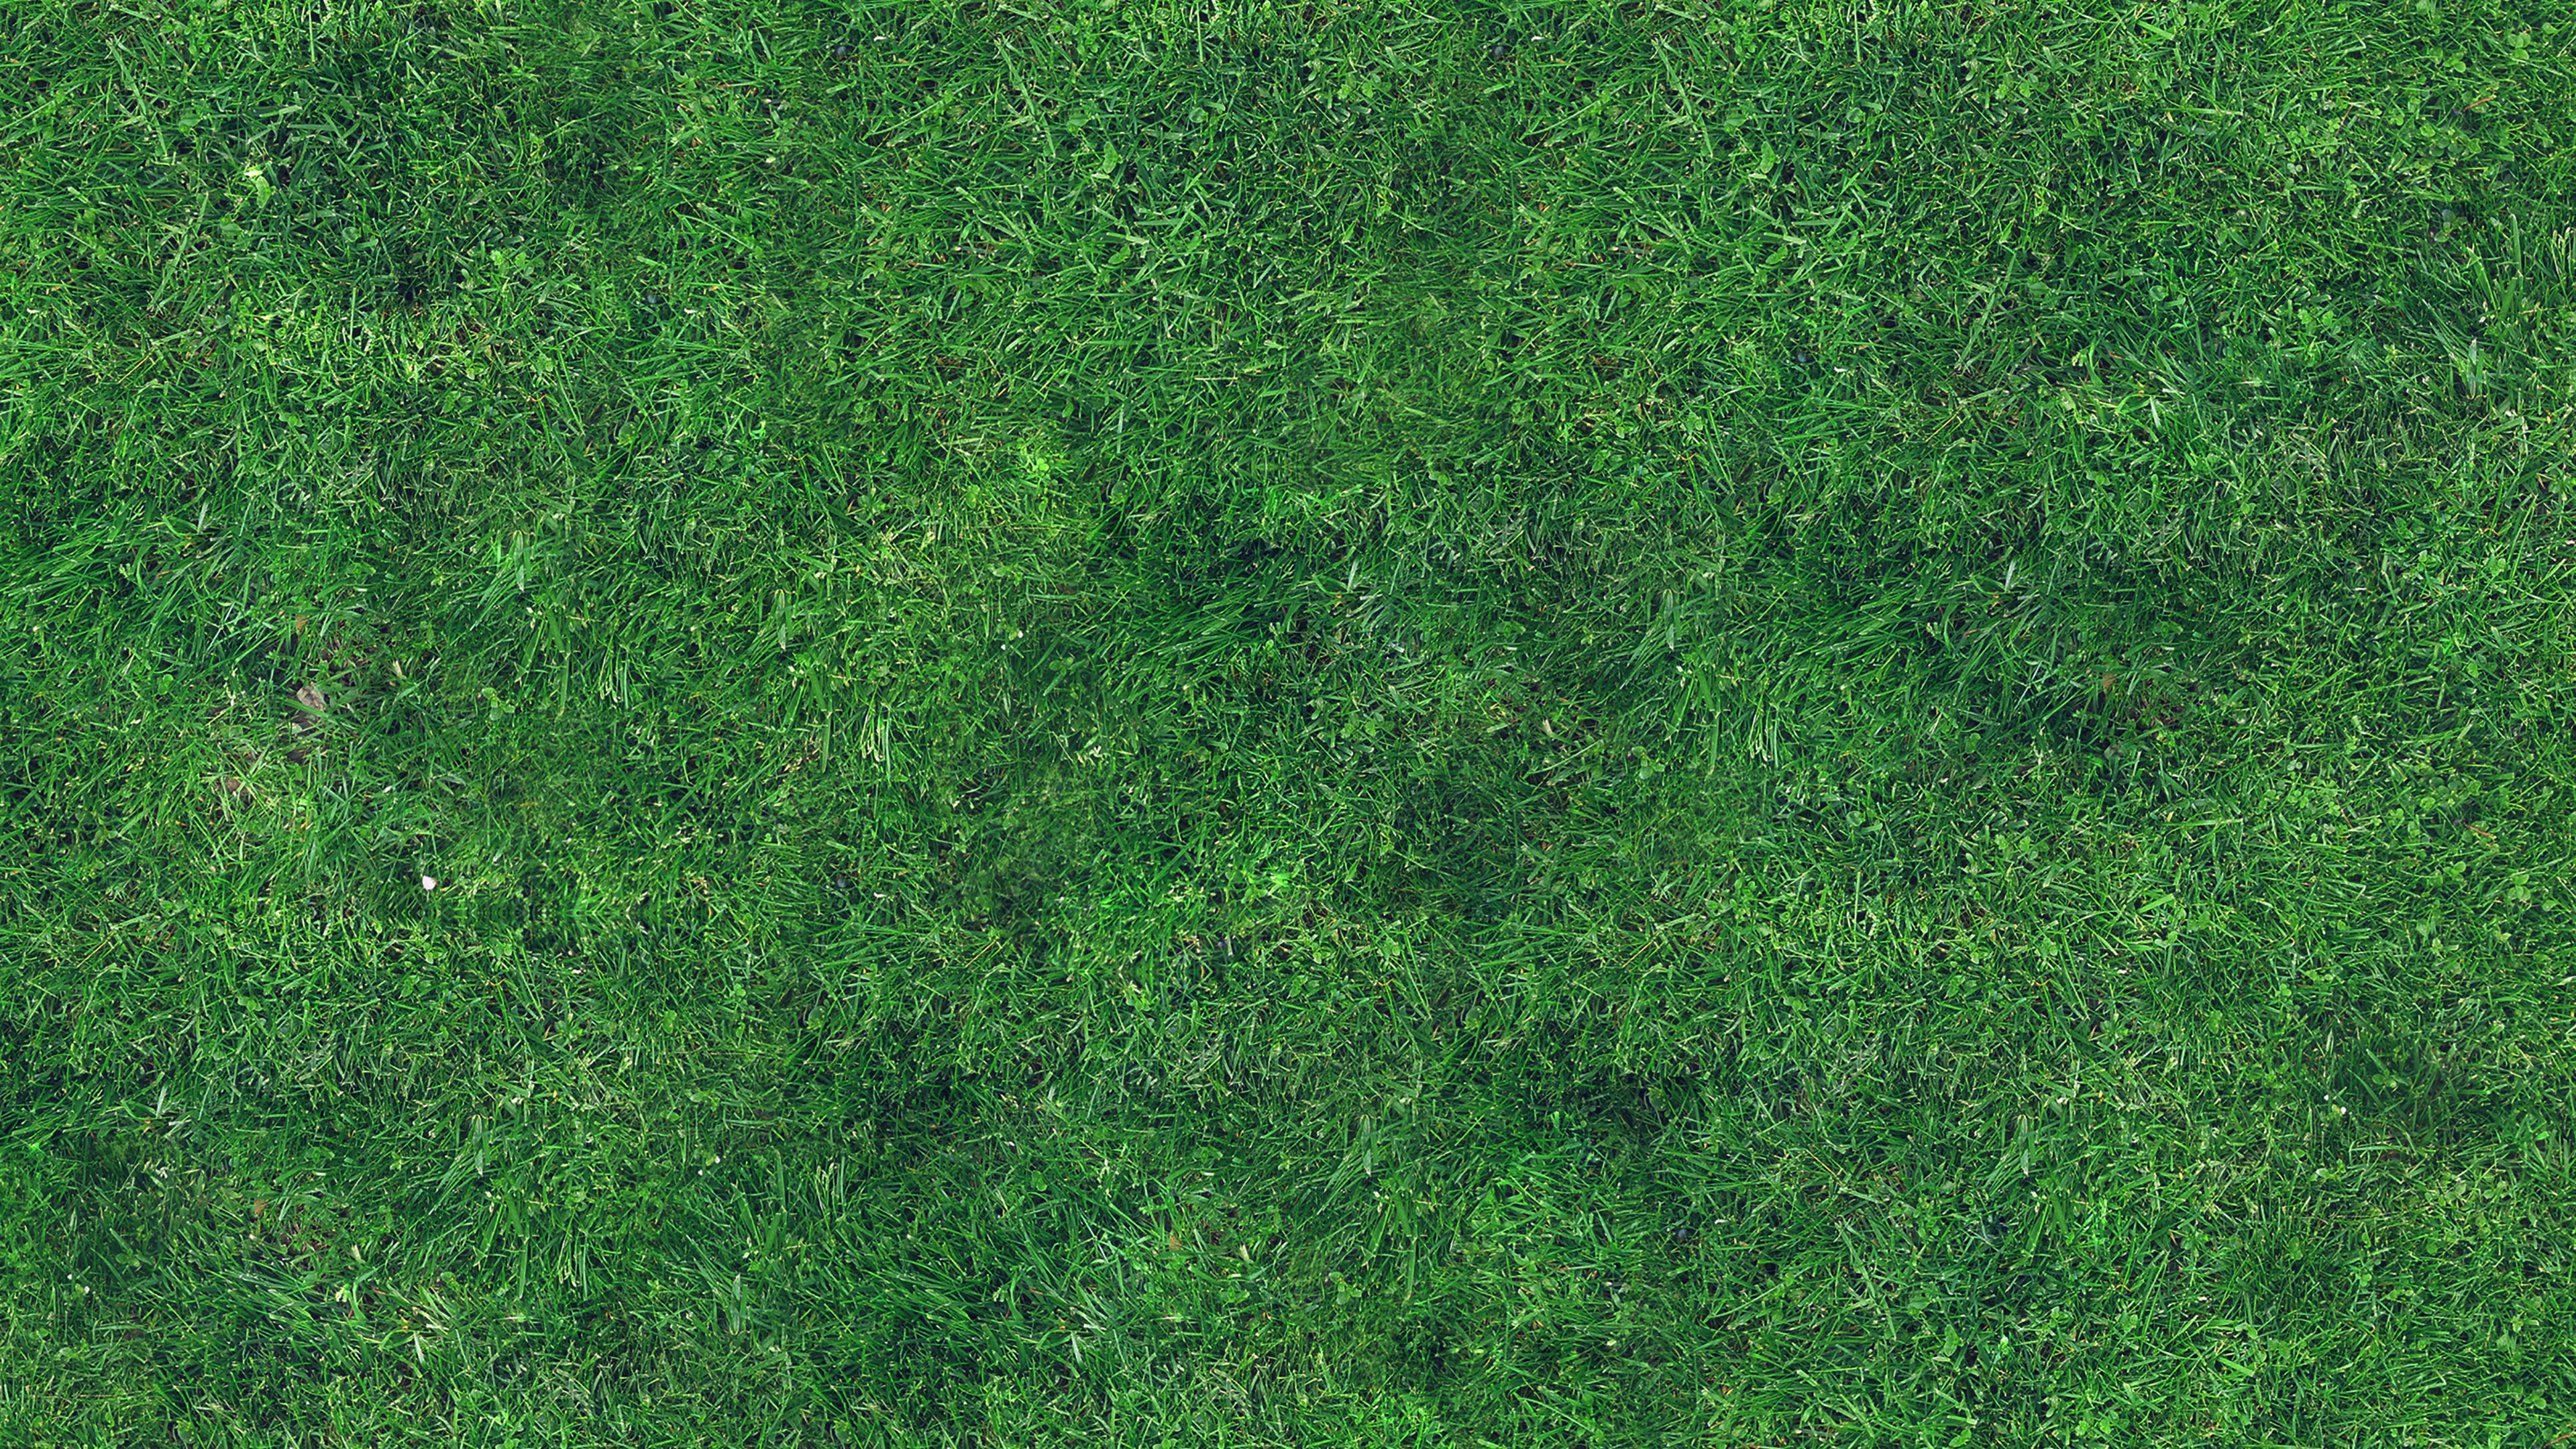 Free photo: Grass texture, Green, Lawn